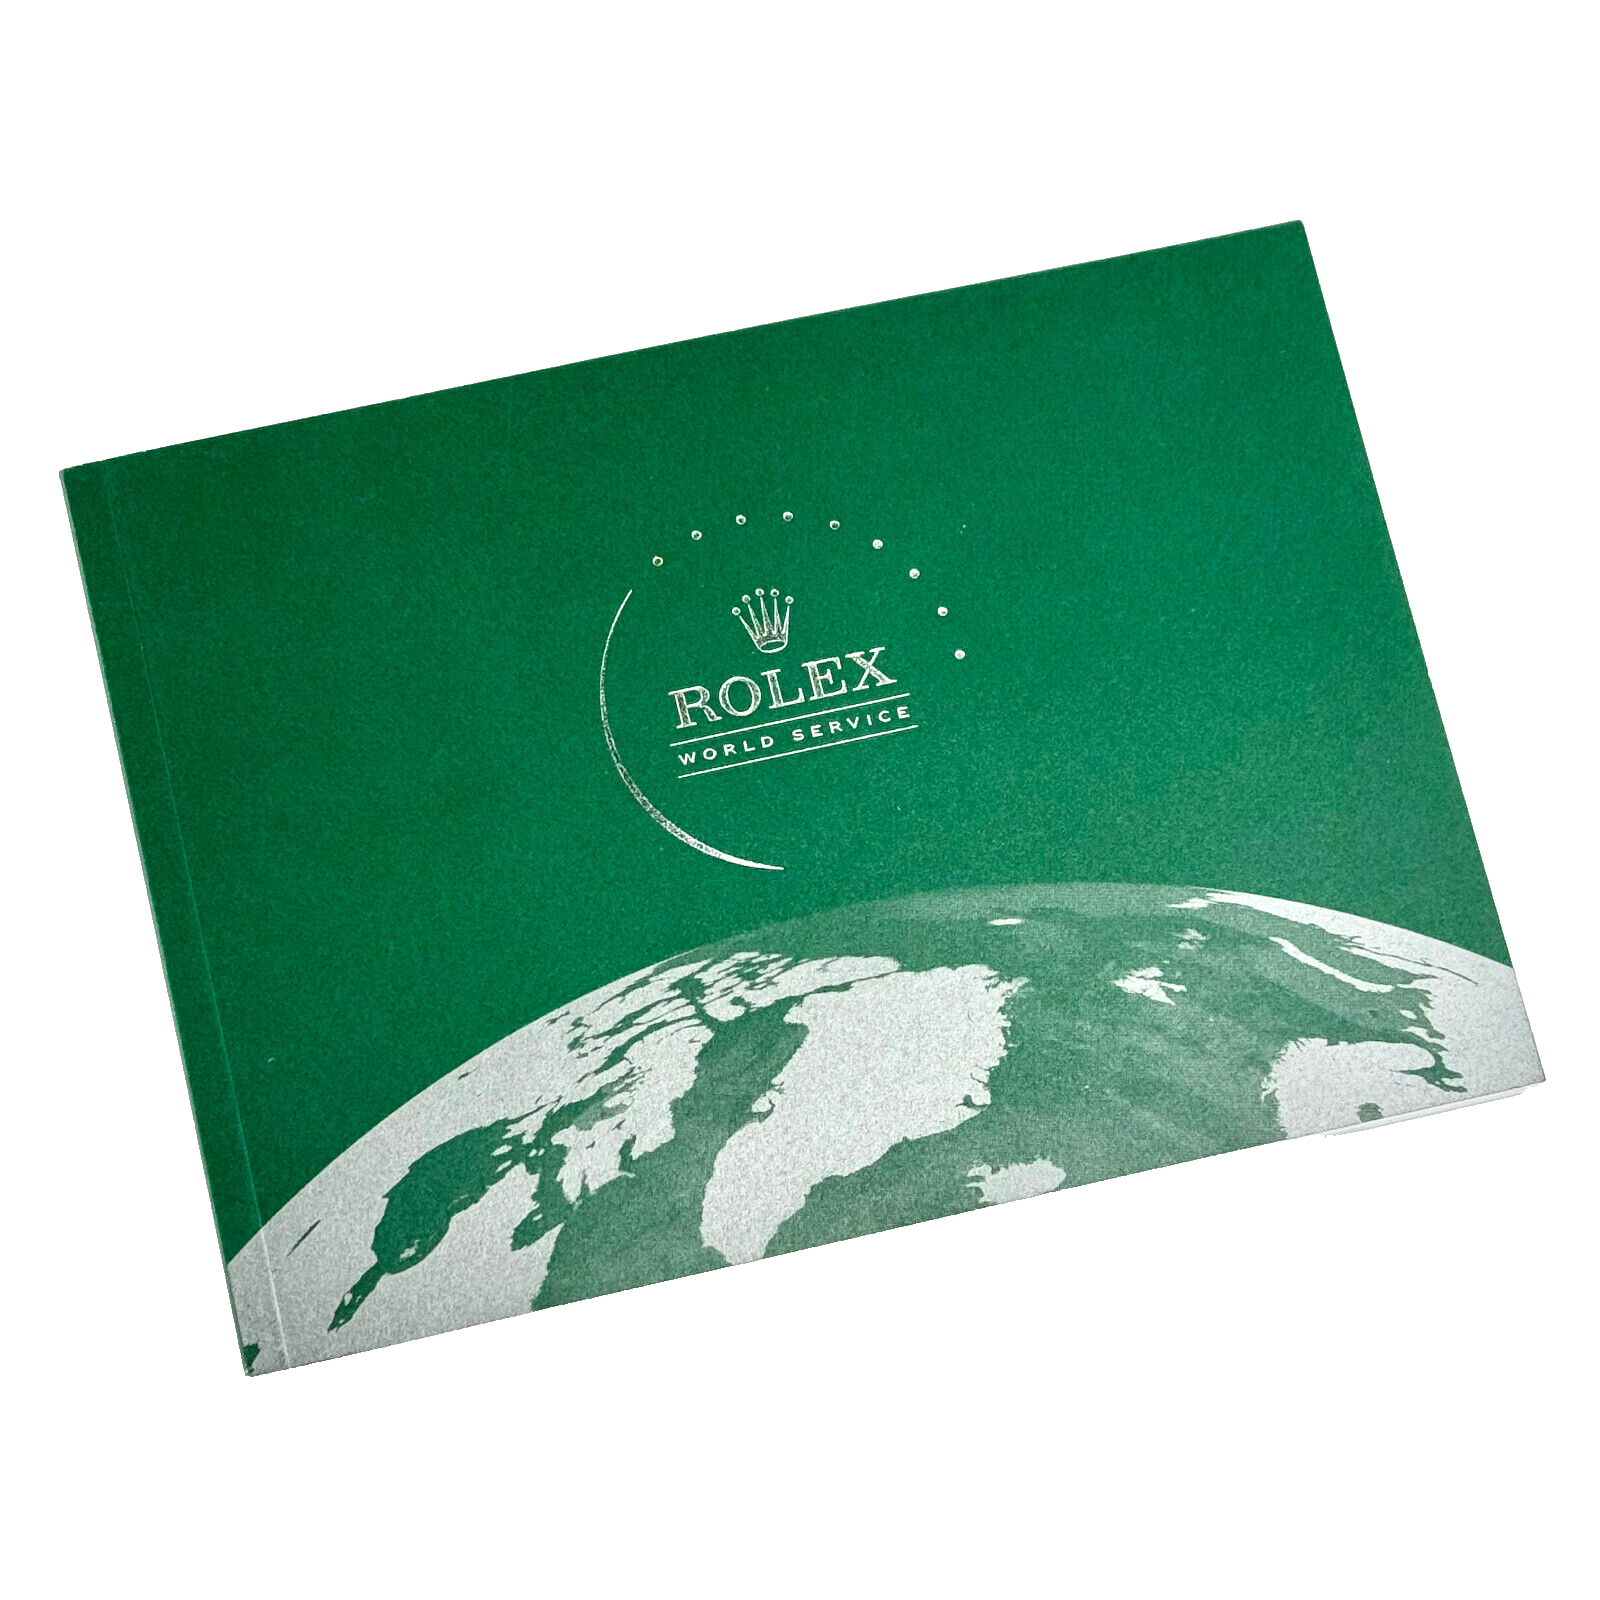 Rolex World Service Handbuch Booklet Deutsch E6260.11.1-8.2020 Grün Green German